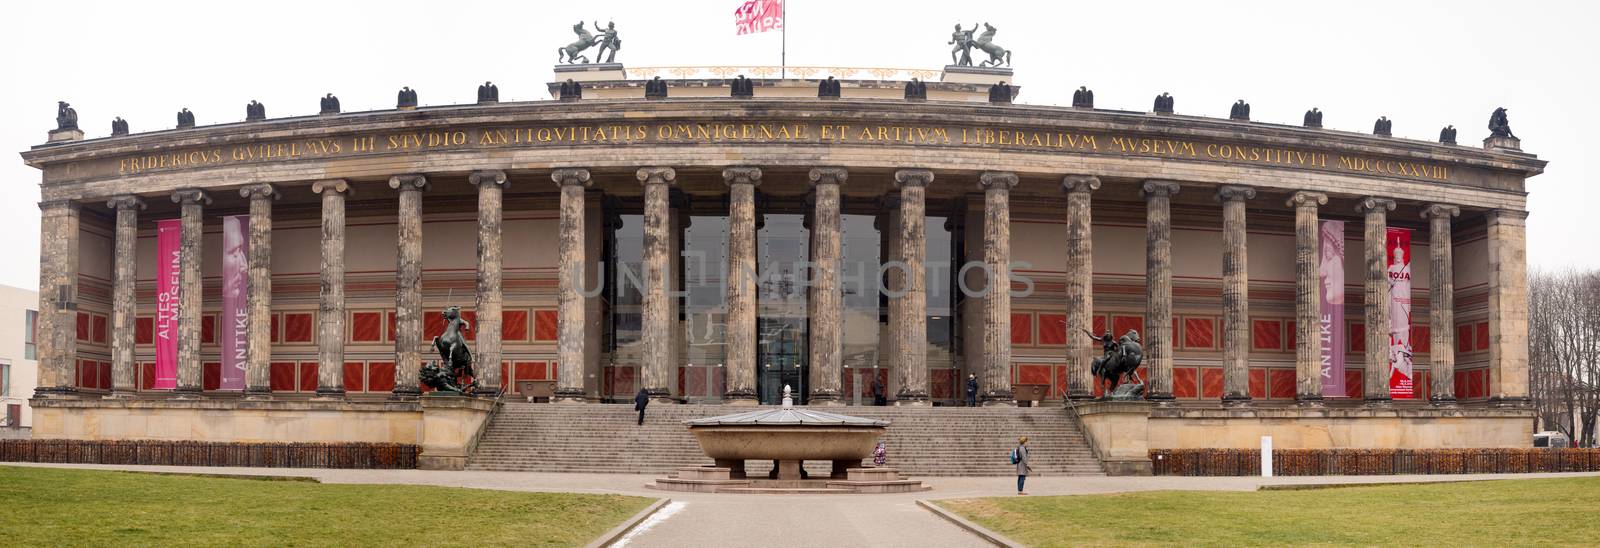 BERLIN, GERMANY - JANUARY 05, 2016: People visiting the Alte Nationalgalerie museum in Berlin Germany 